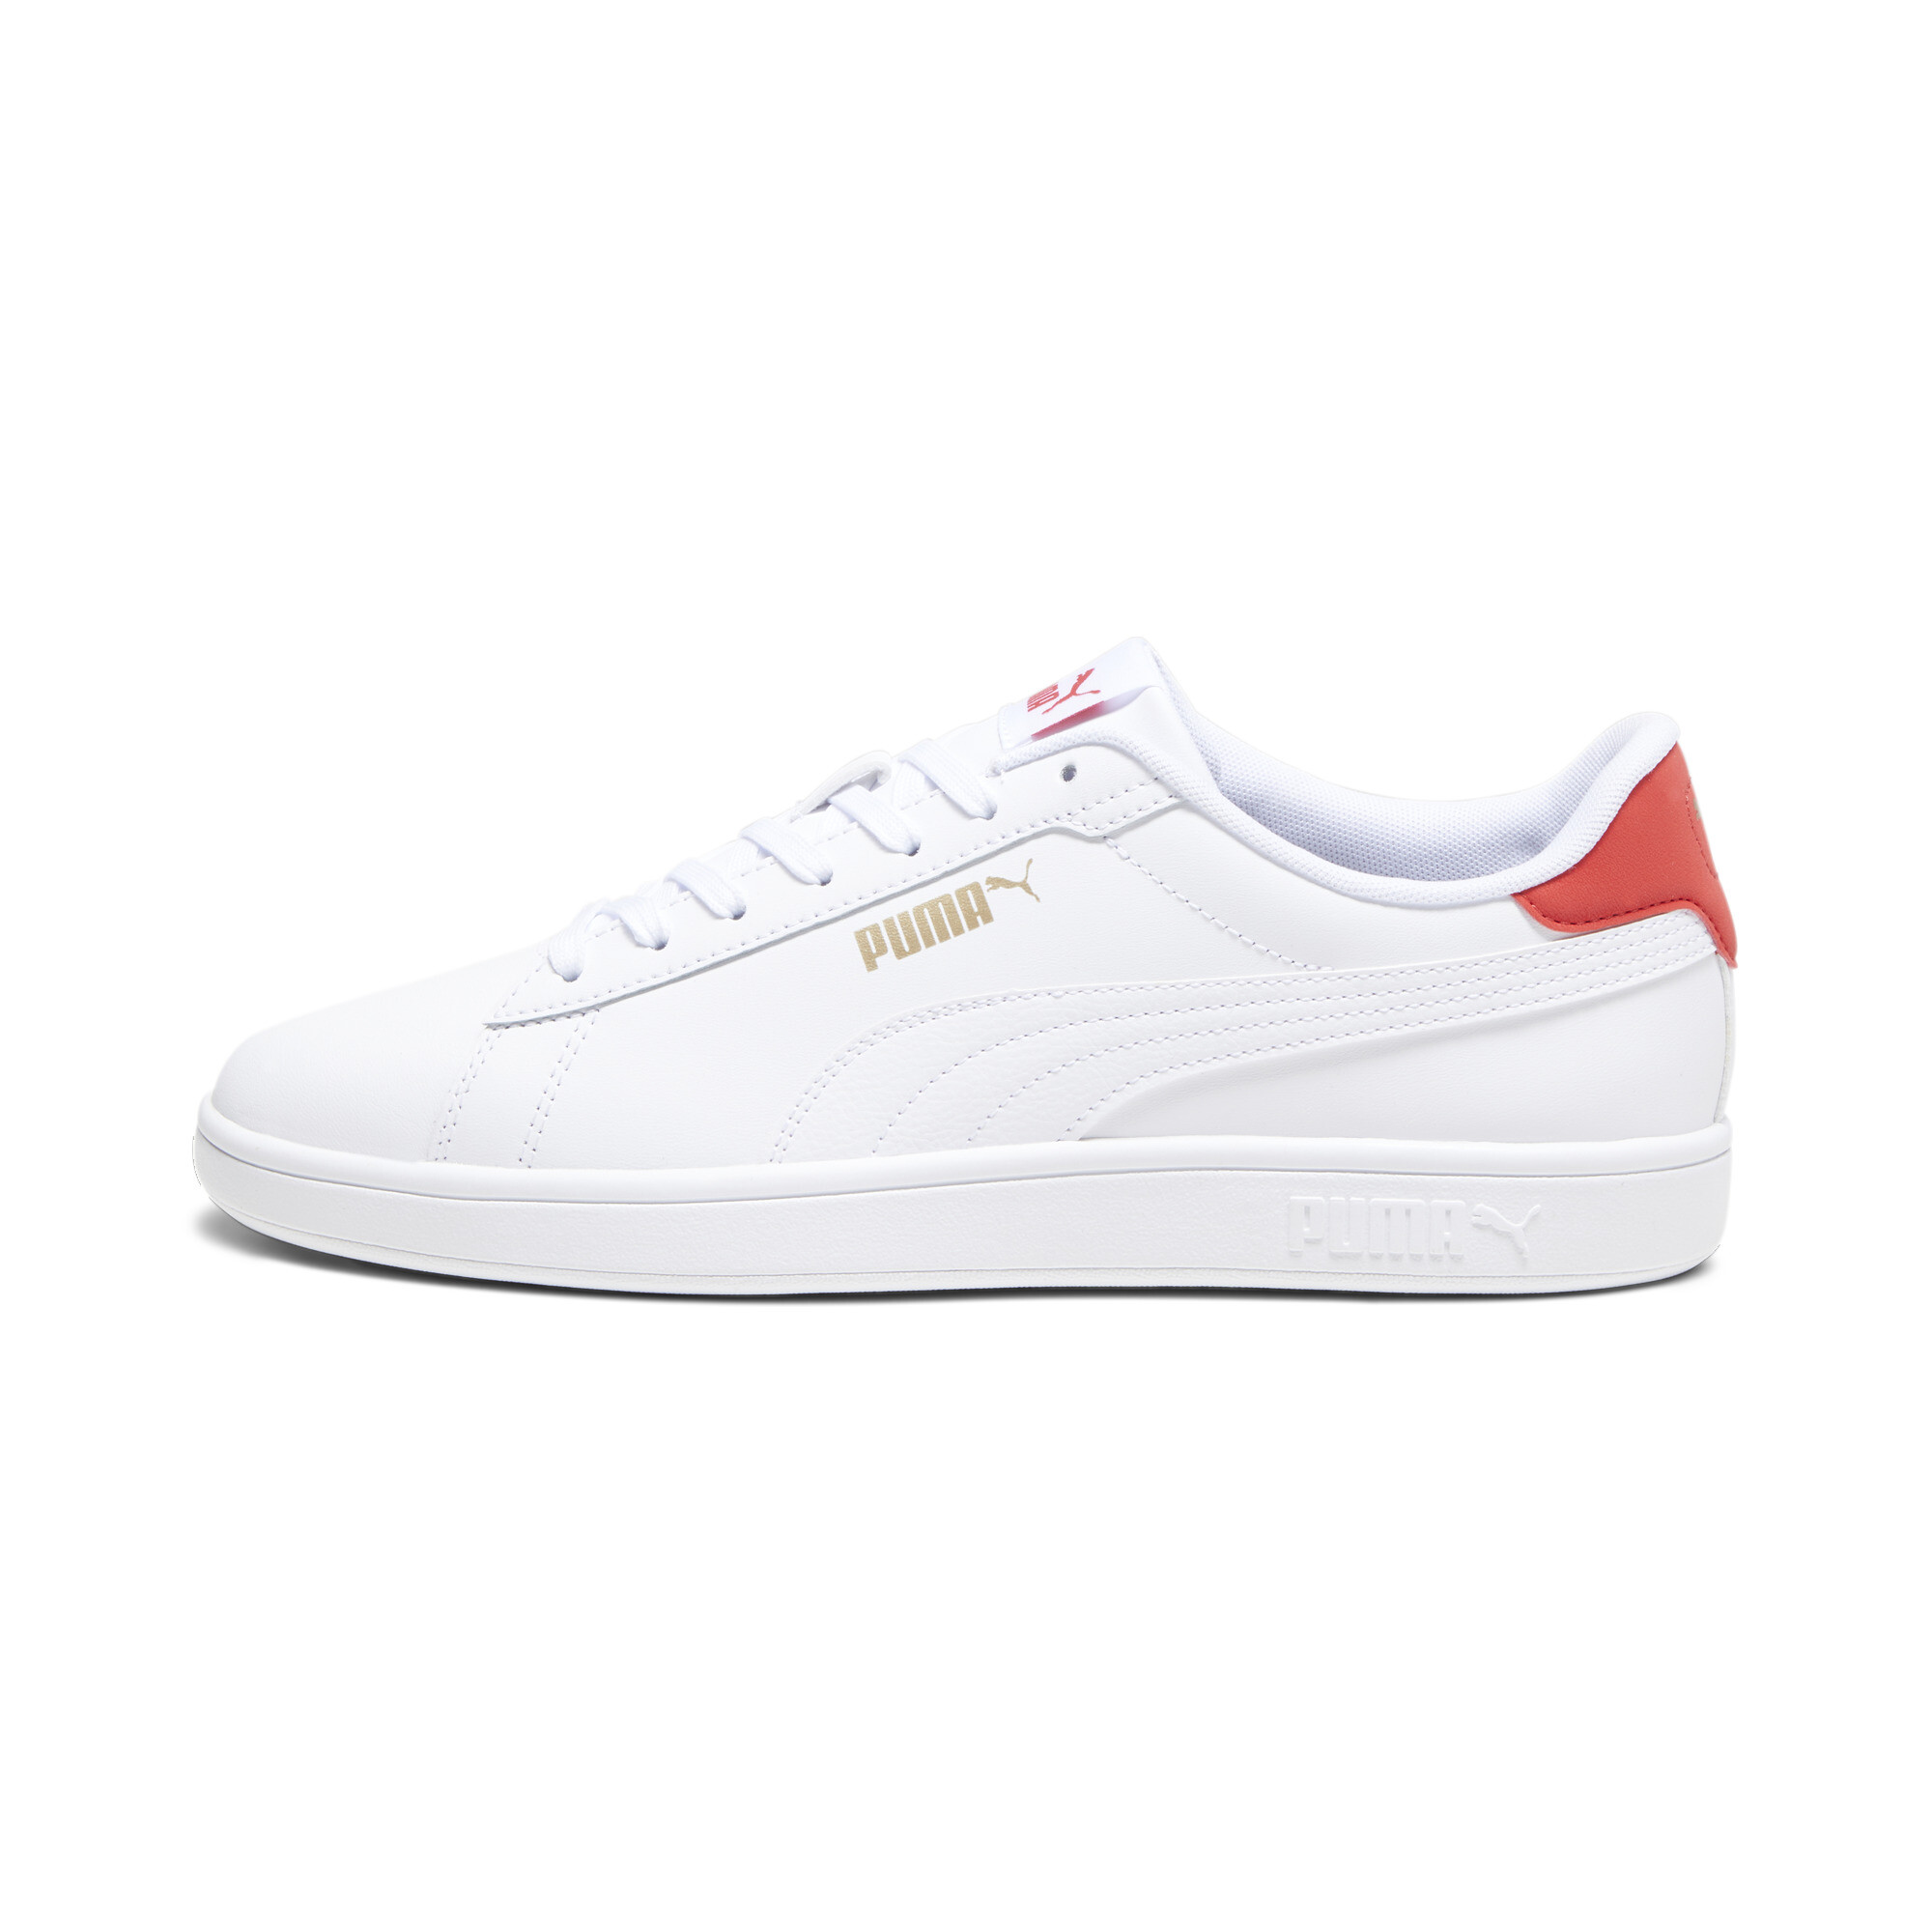 Puma Smash 3.0 L Sneakers, White, Size 36, Shoes